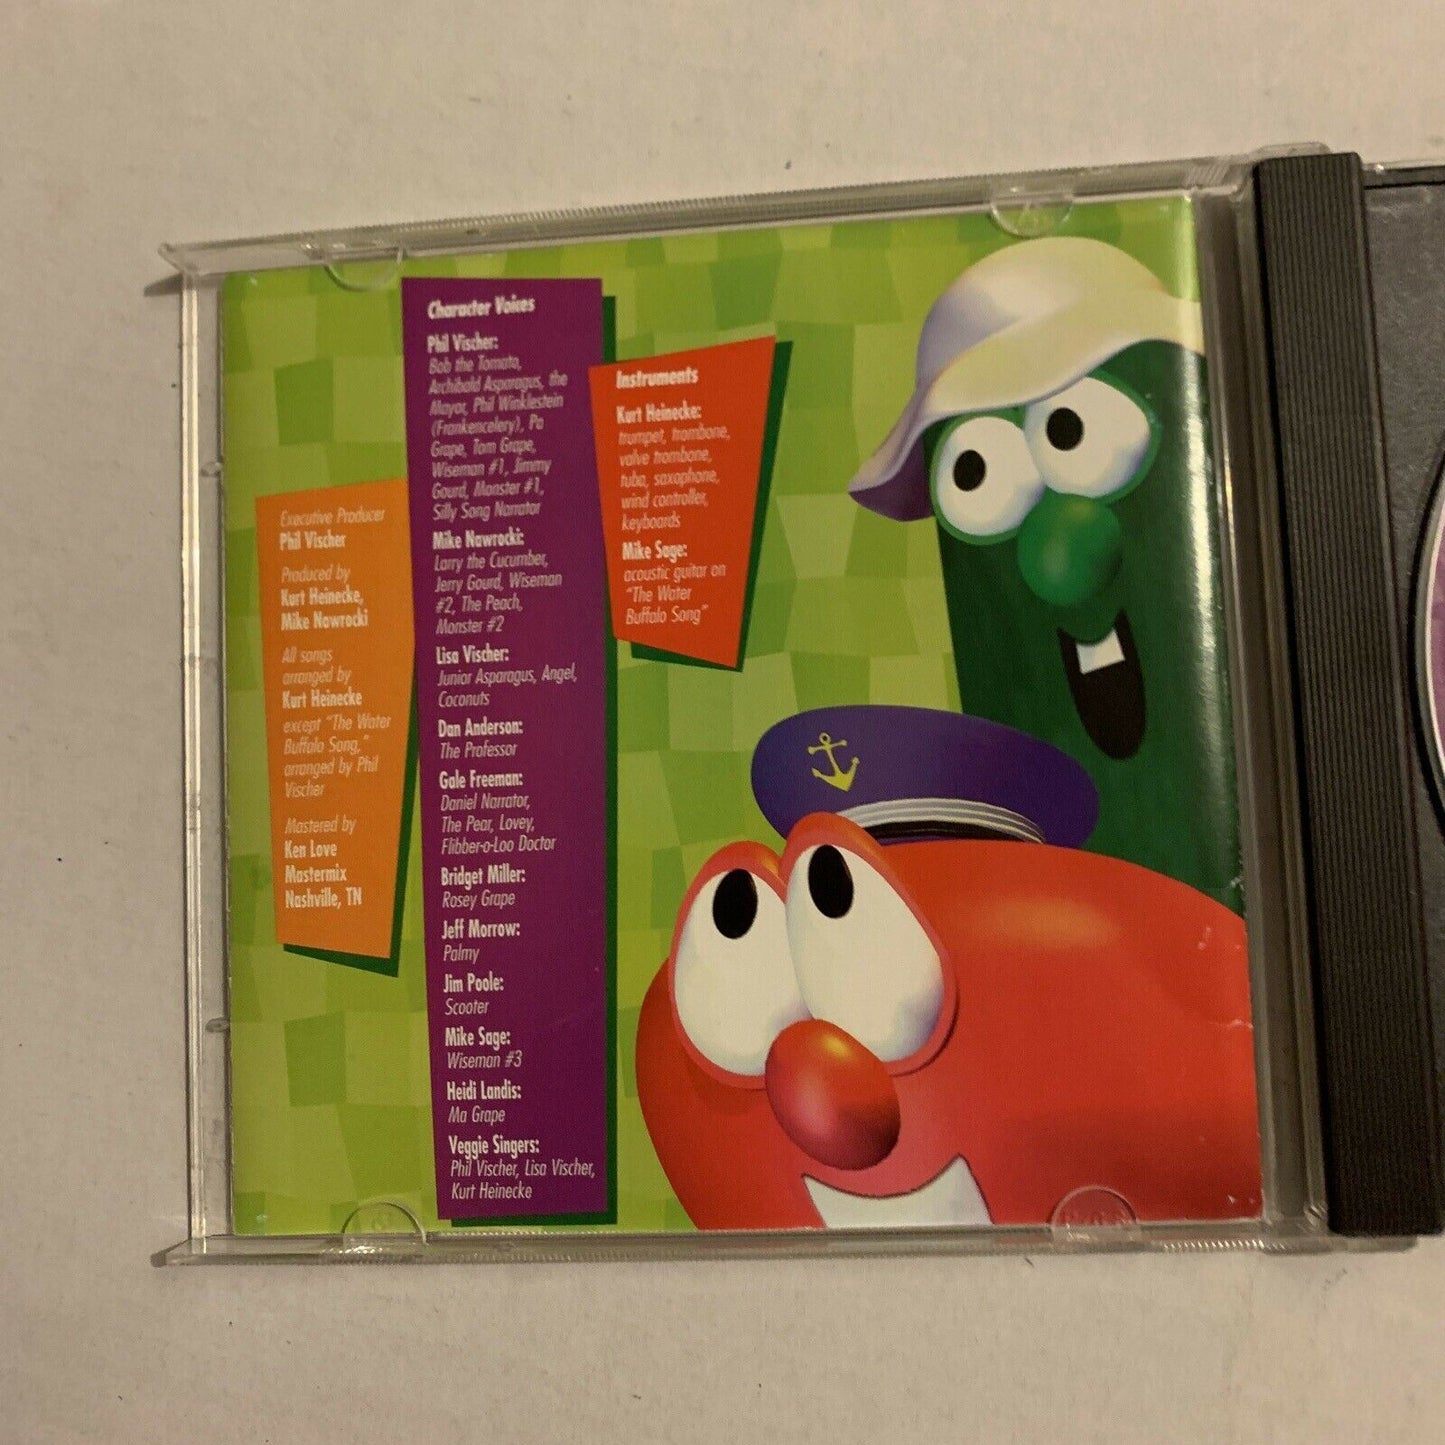 2x Veggie Tales - Veggie Tunes & Veggie Rocks! CD Audio